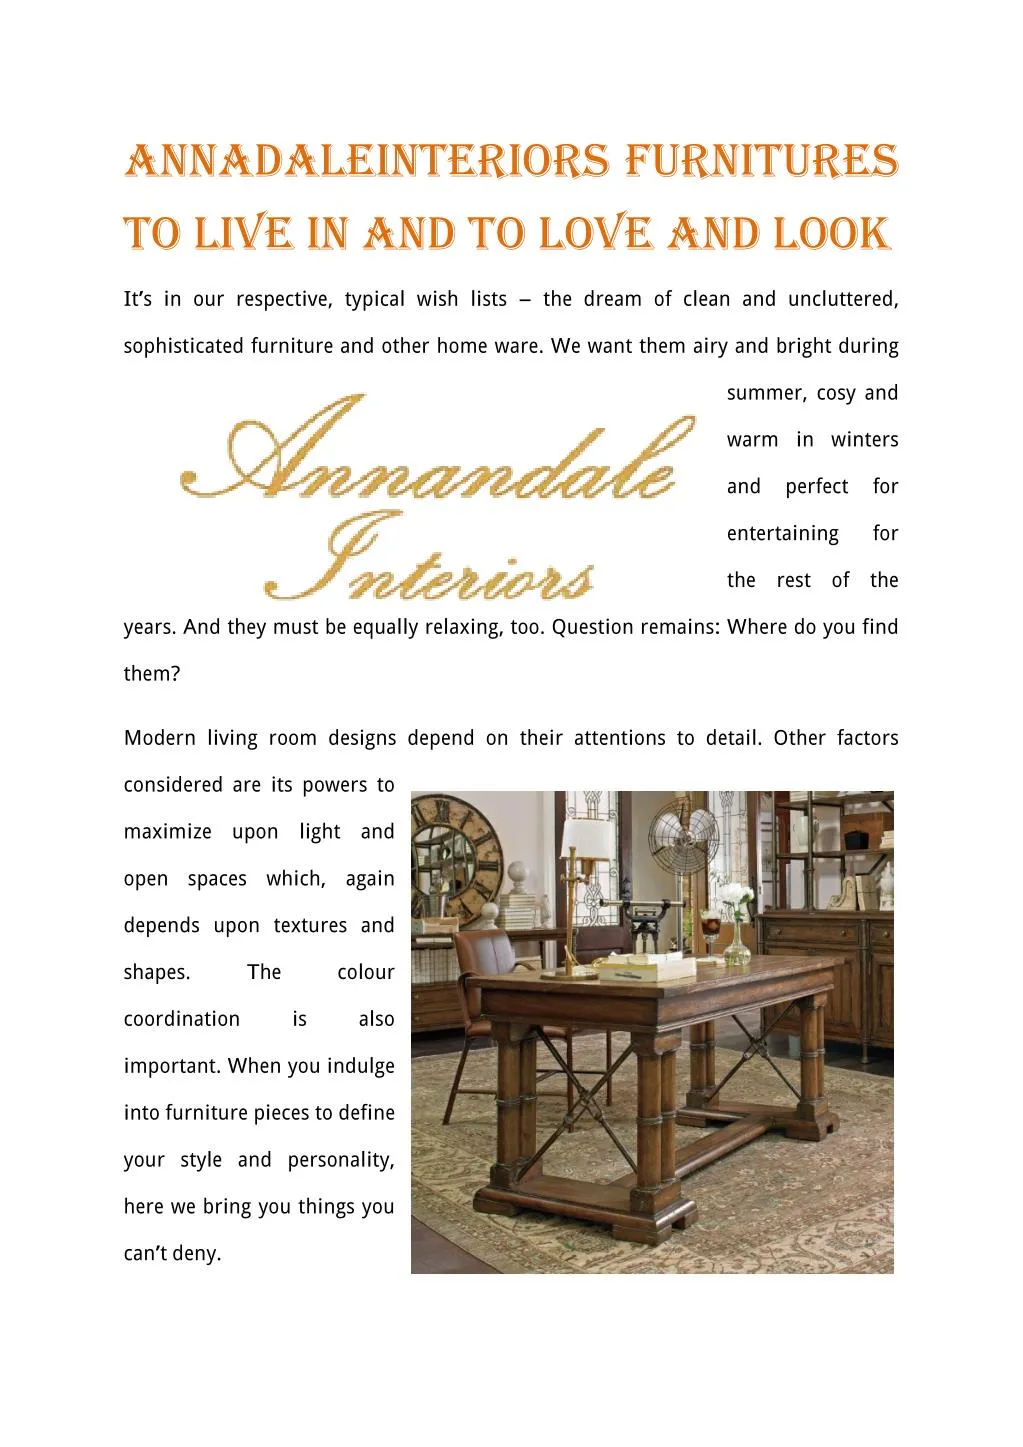 annadaleinteriors furnitures to live